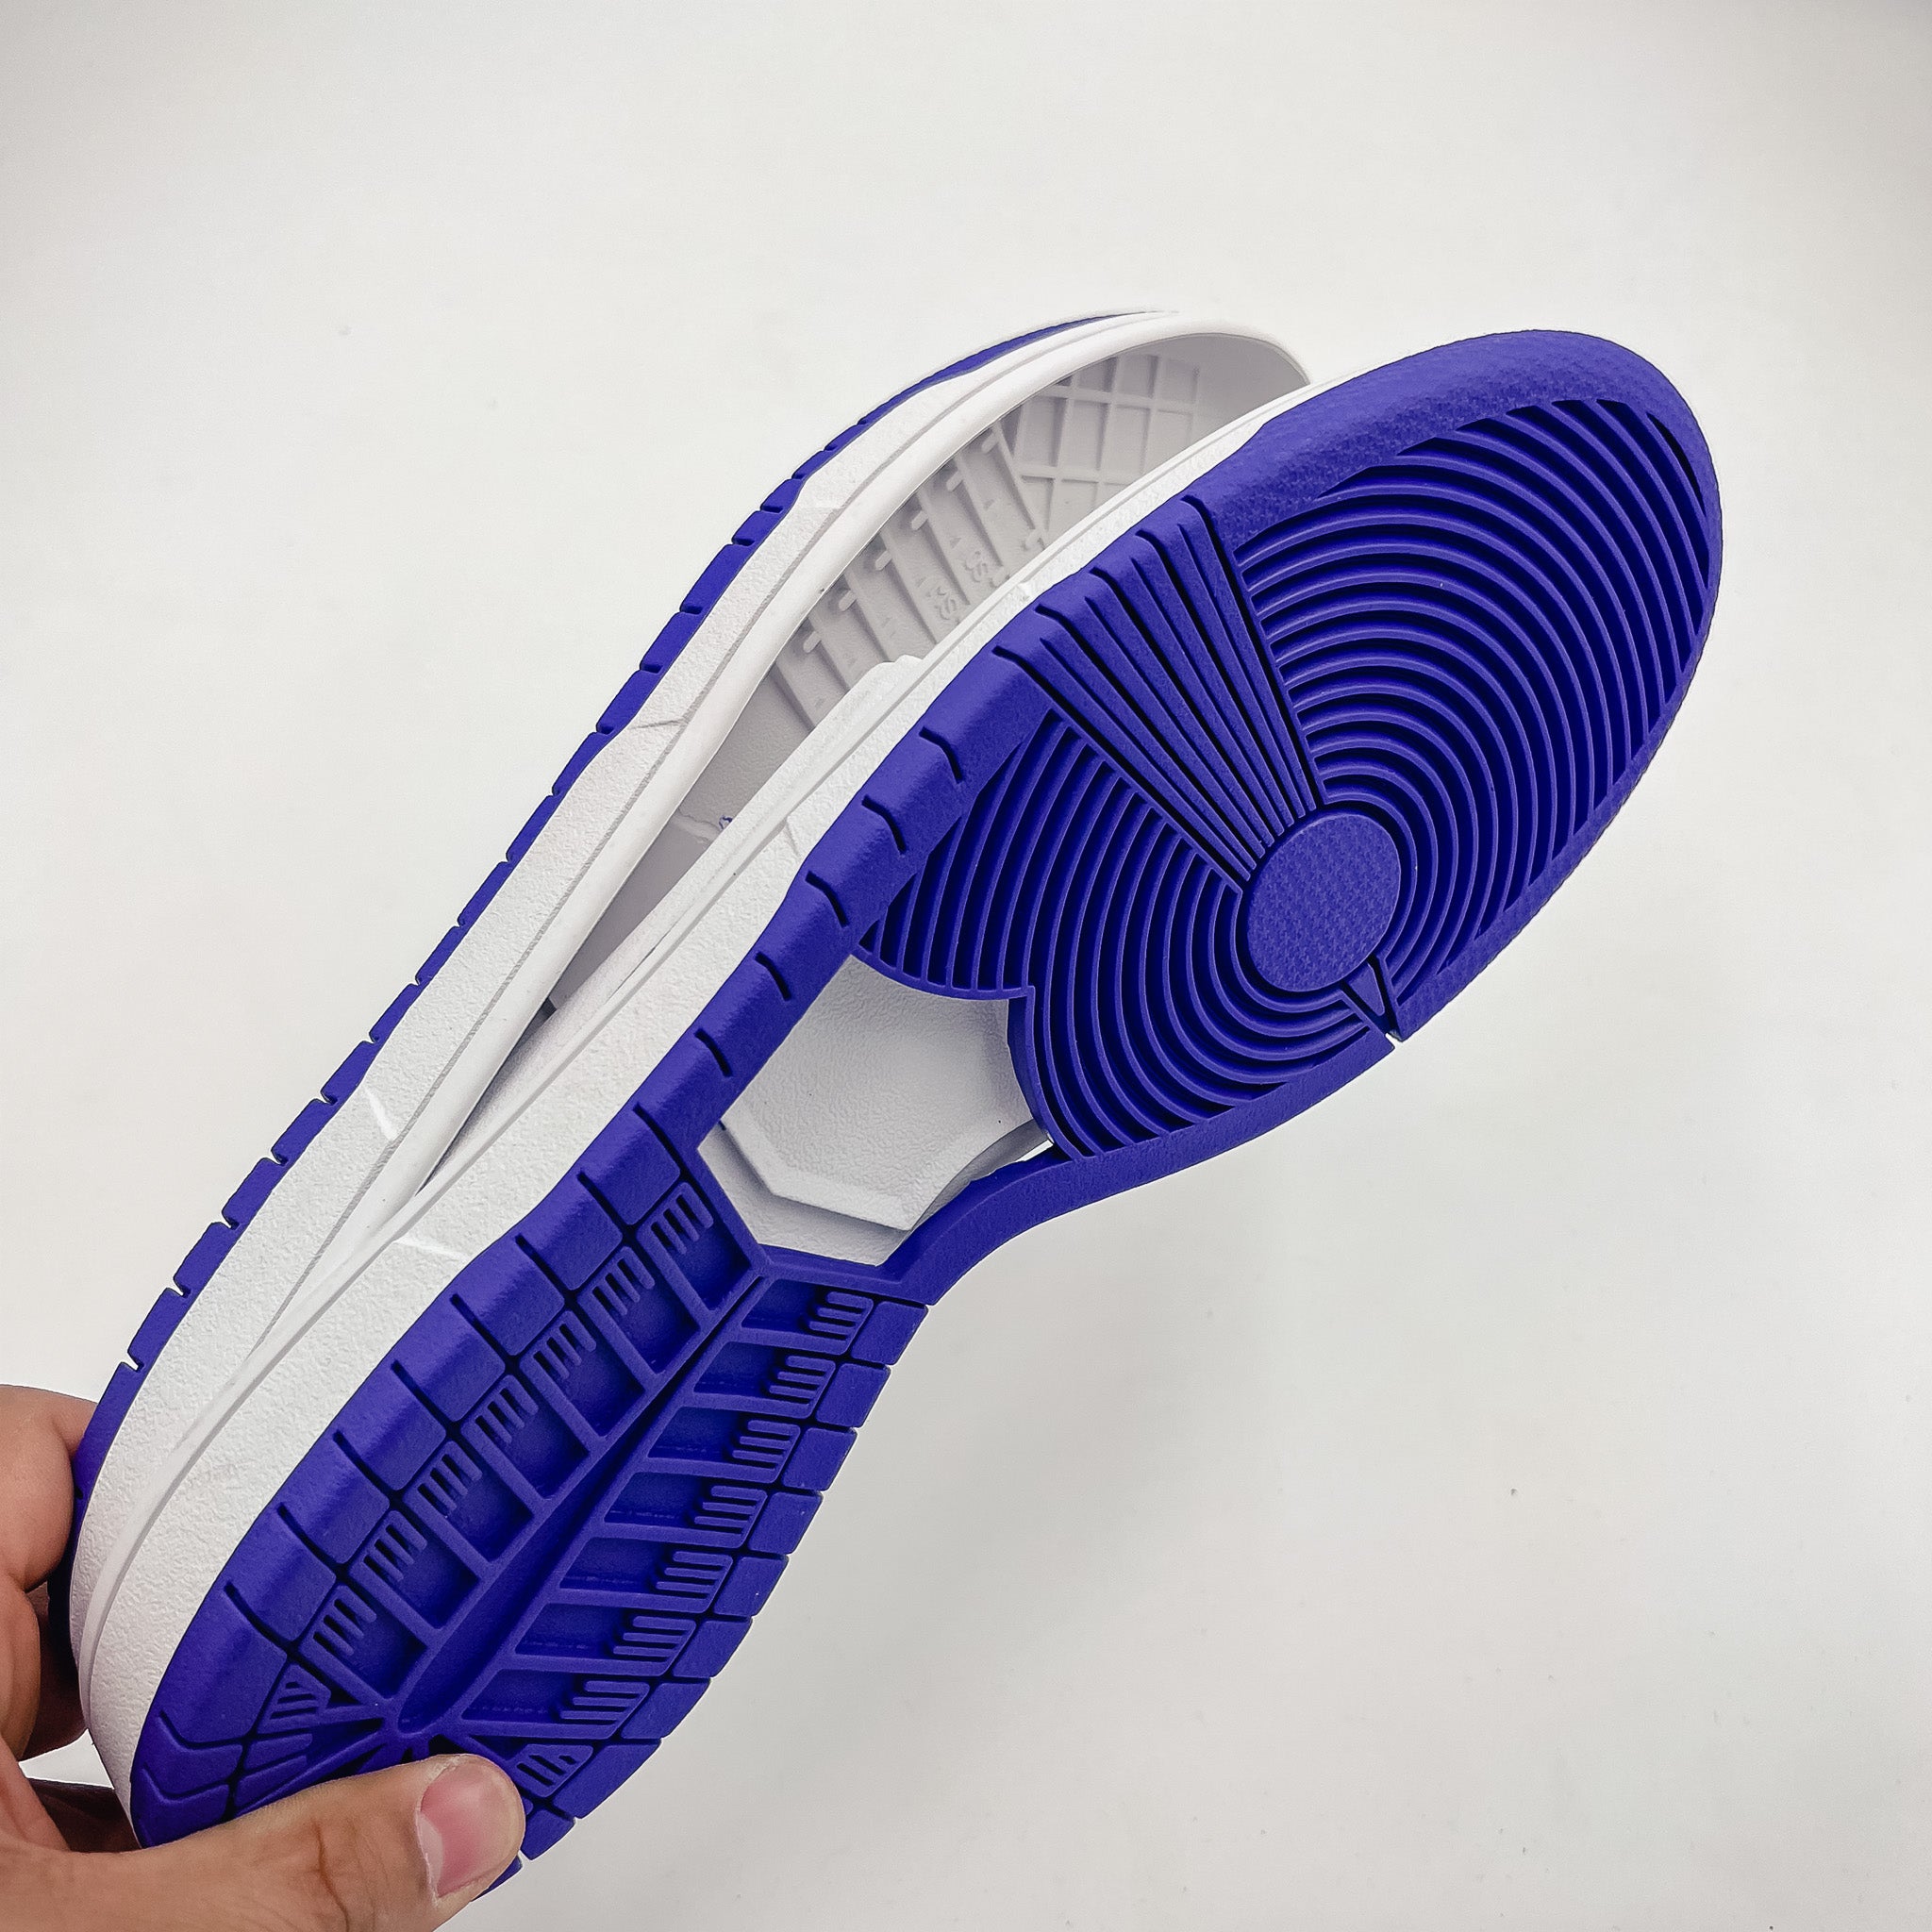 SkateBoard (SB Dunk) Shoe Soles, White/Purple